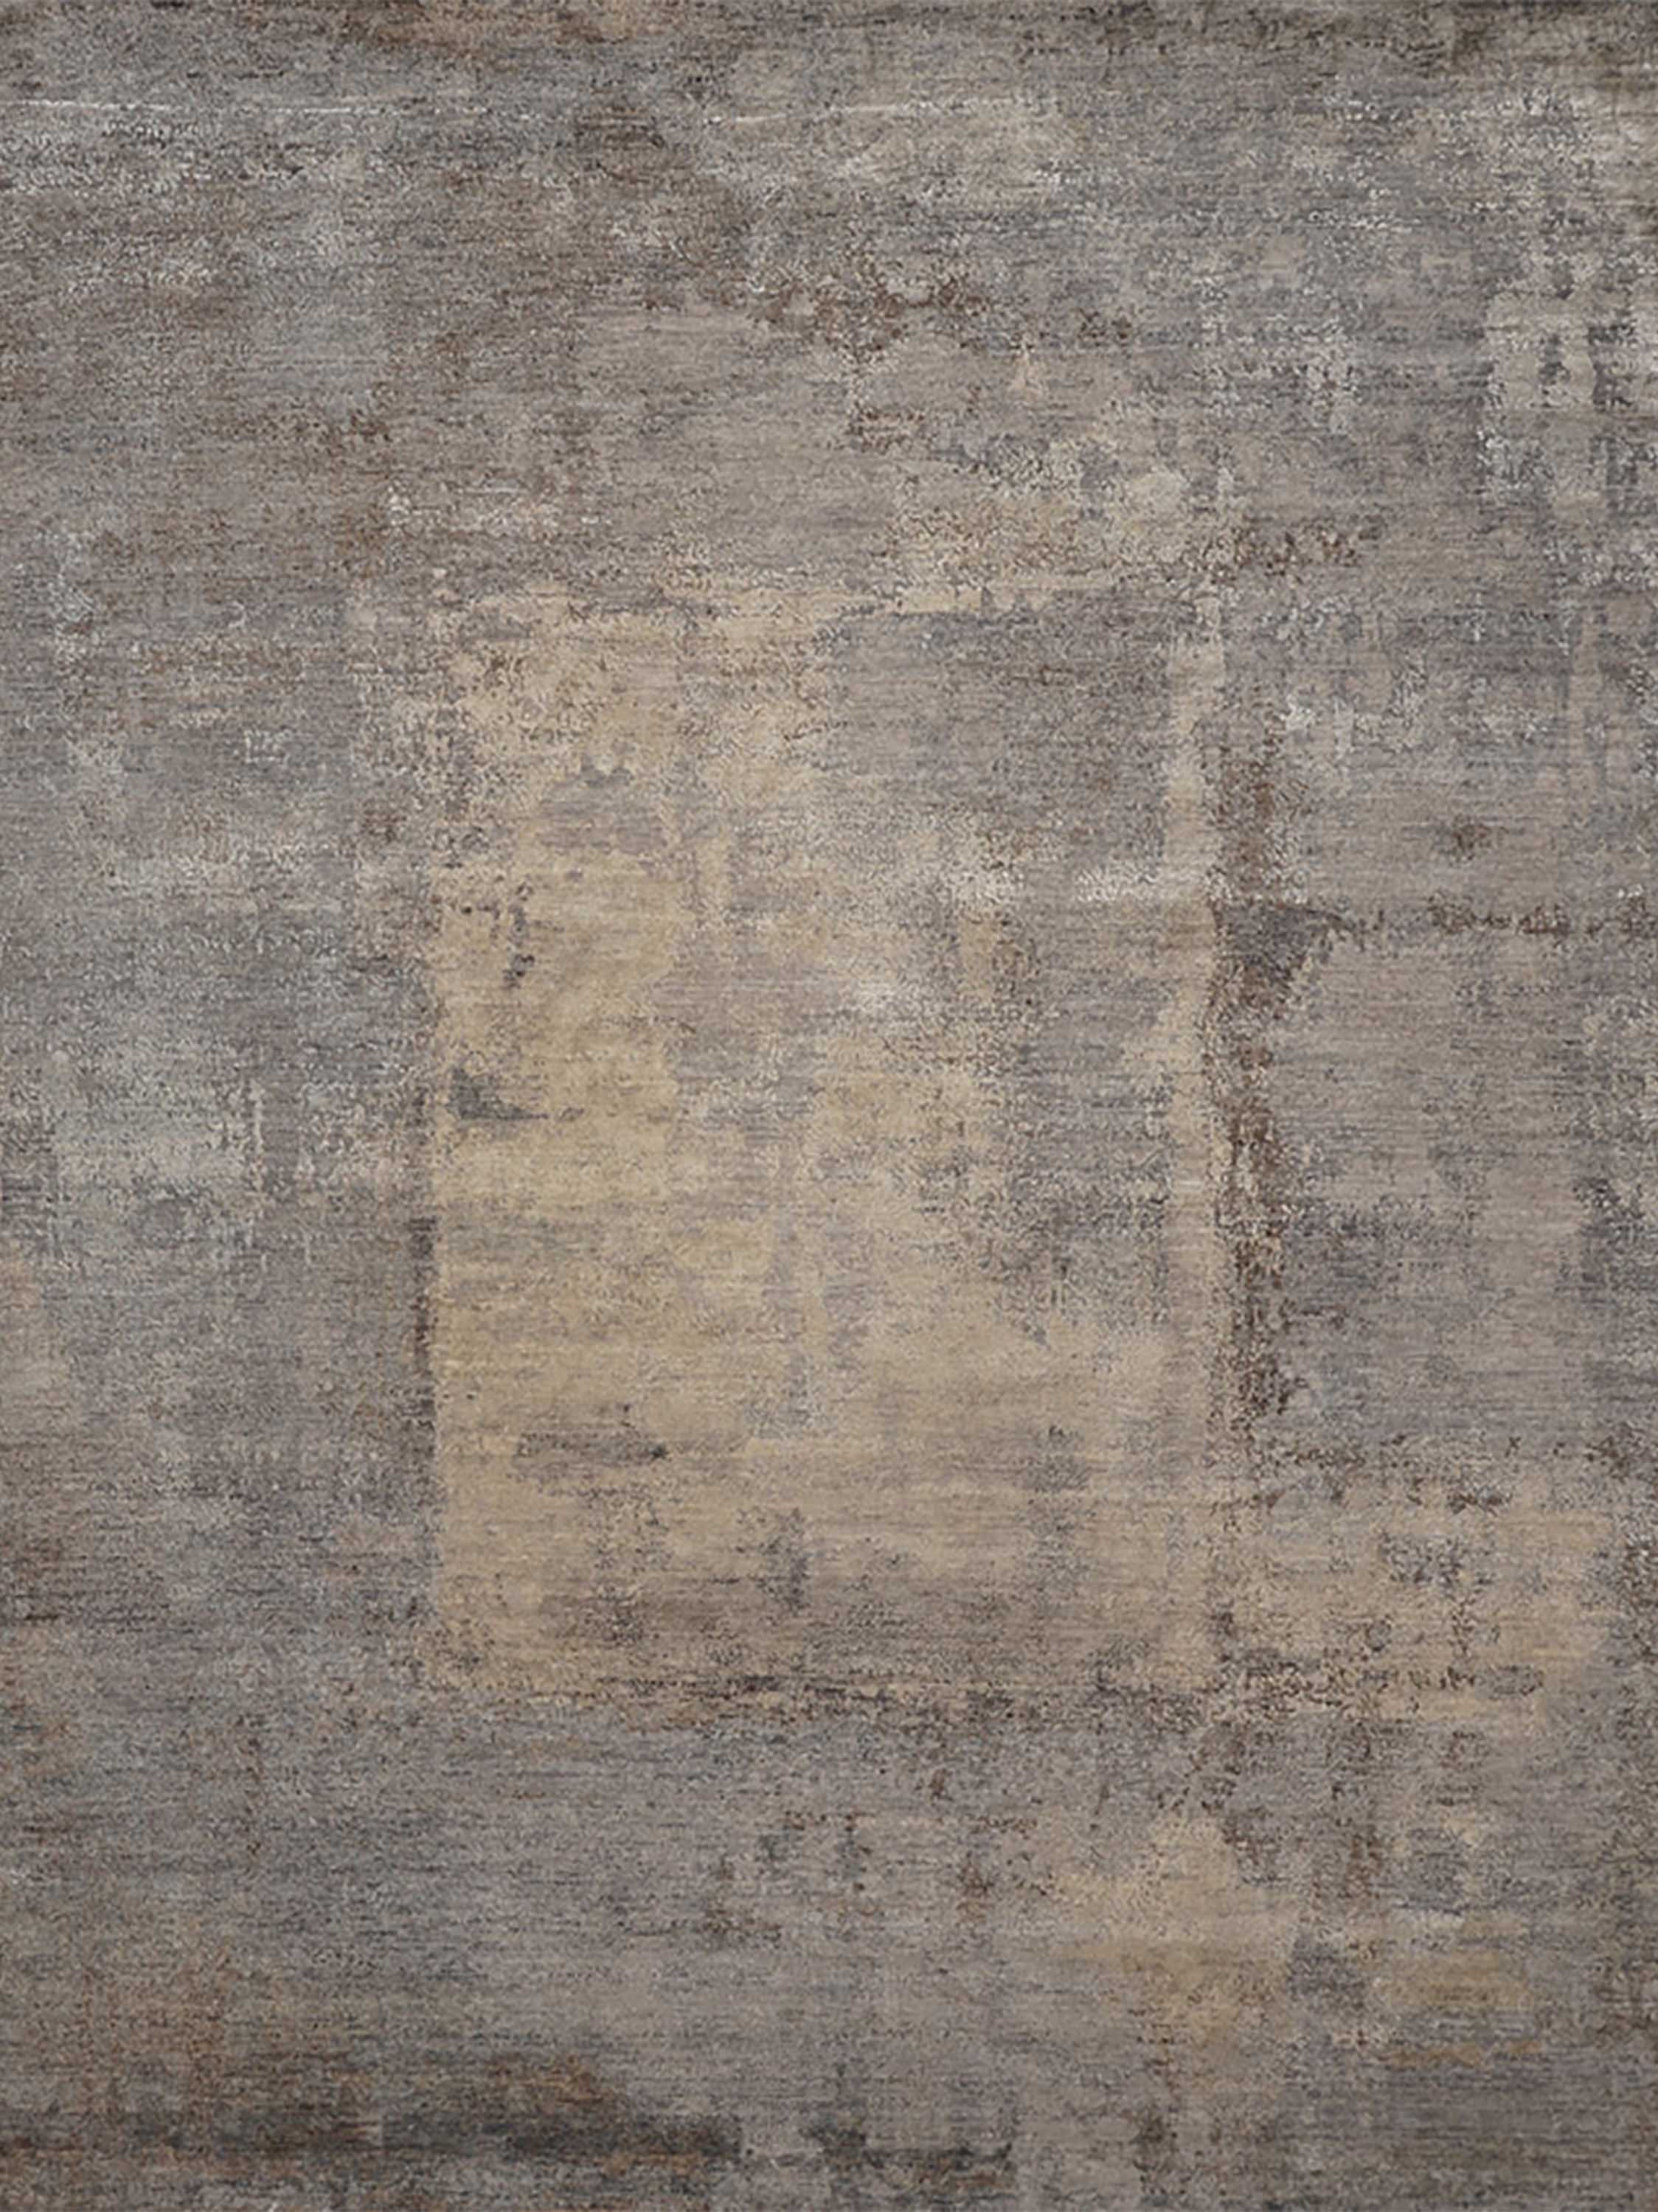 De Munk Carpets - Nuovo Tifosi - 170x240 cm Vloerkleed